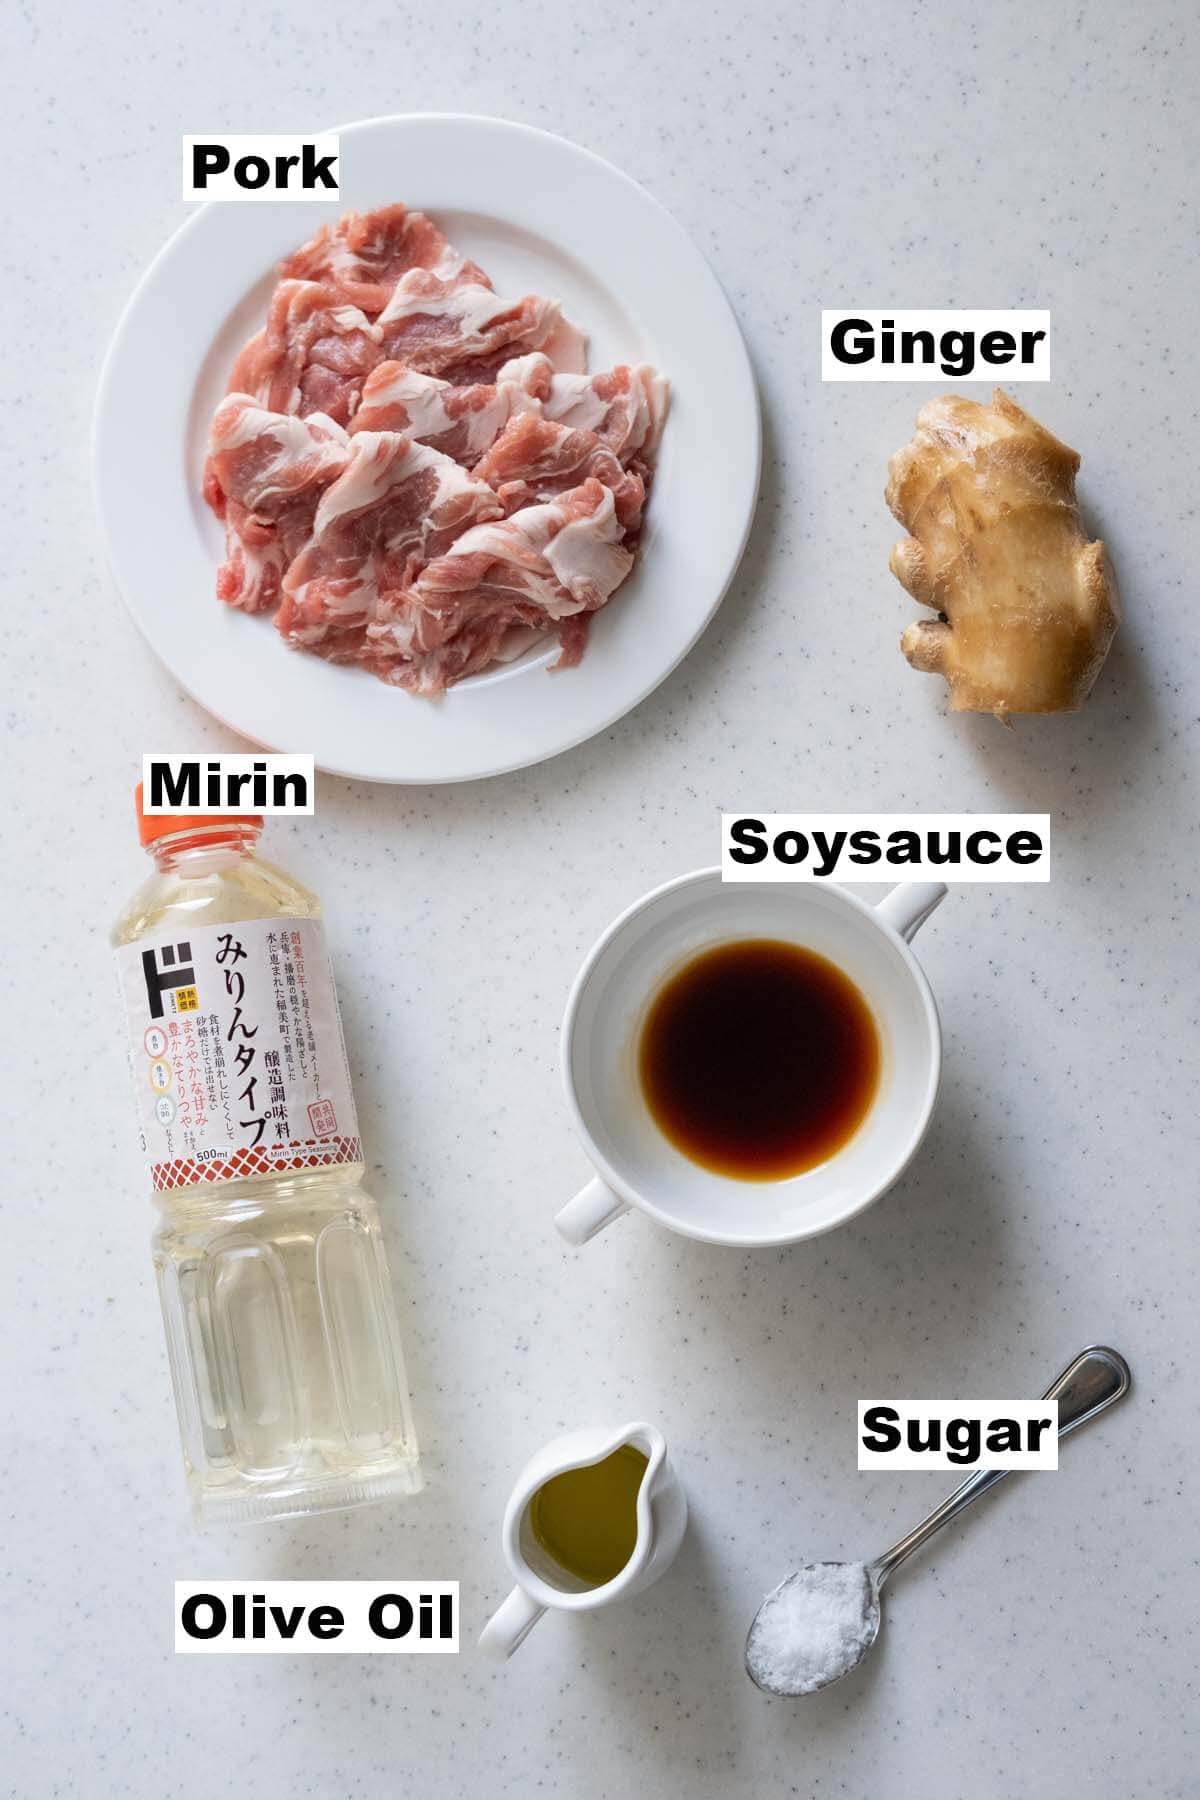 Japanese ginger pork ingredients. 